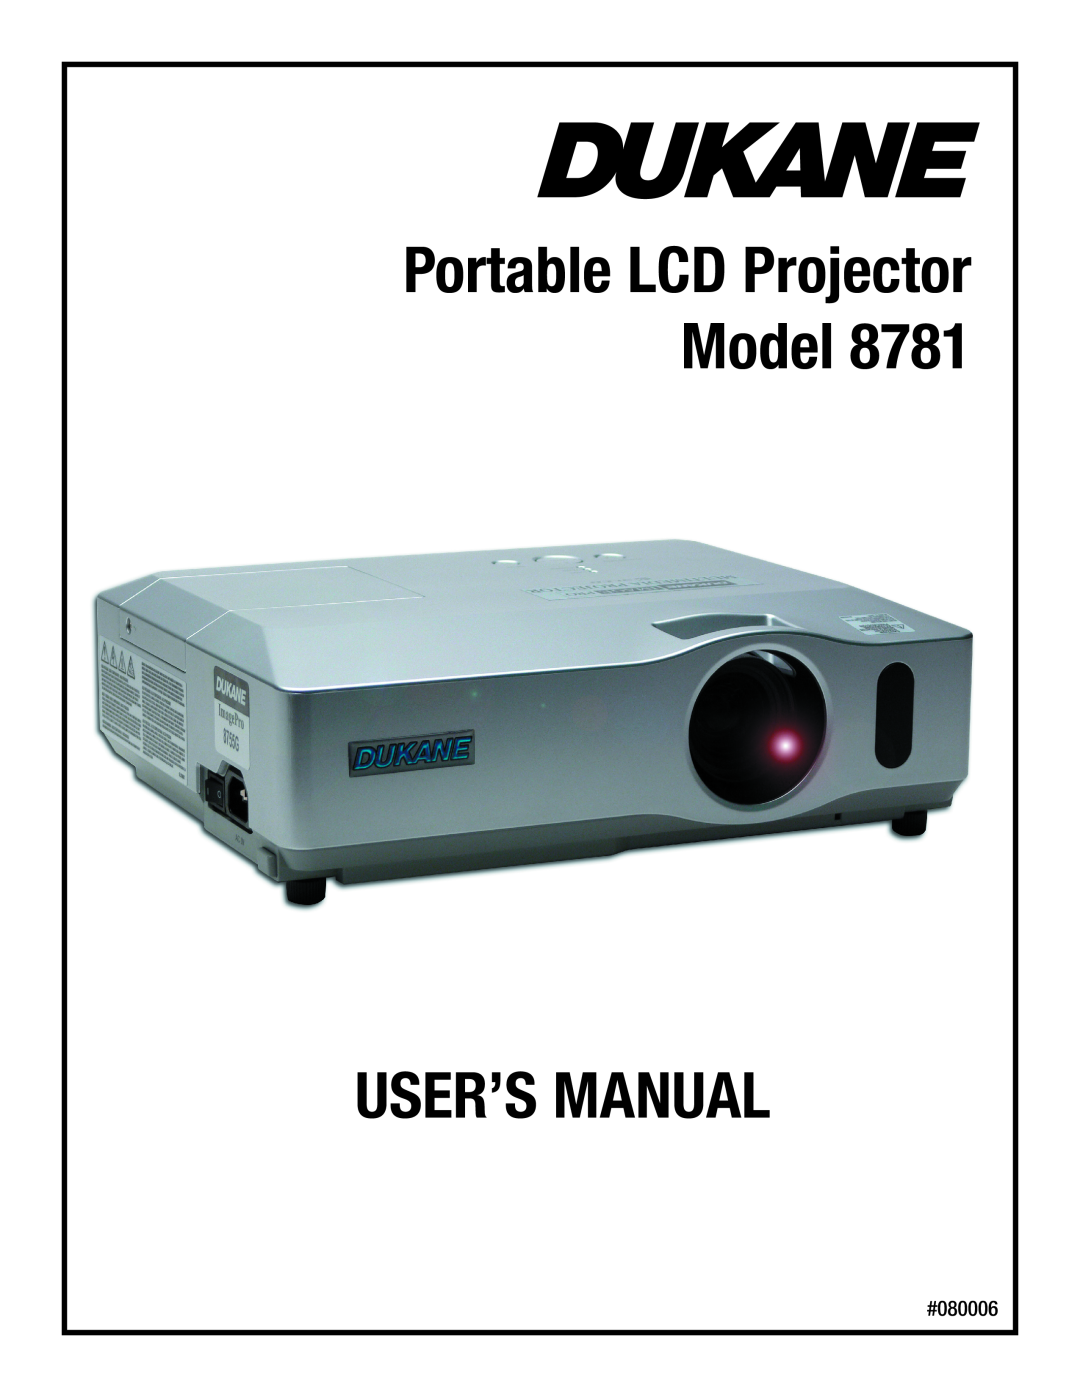 Dukane 8781 user manual Model USER’S MANUAL, Portable LCD Projector, #080006 